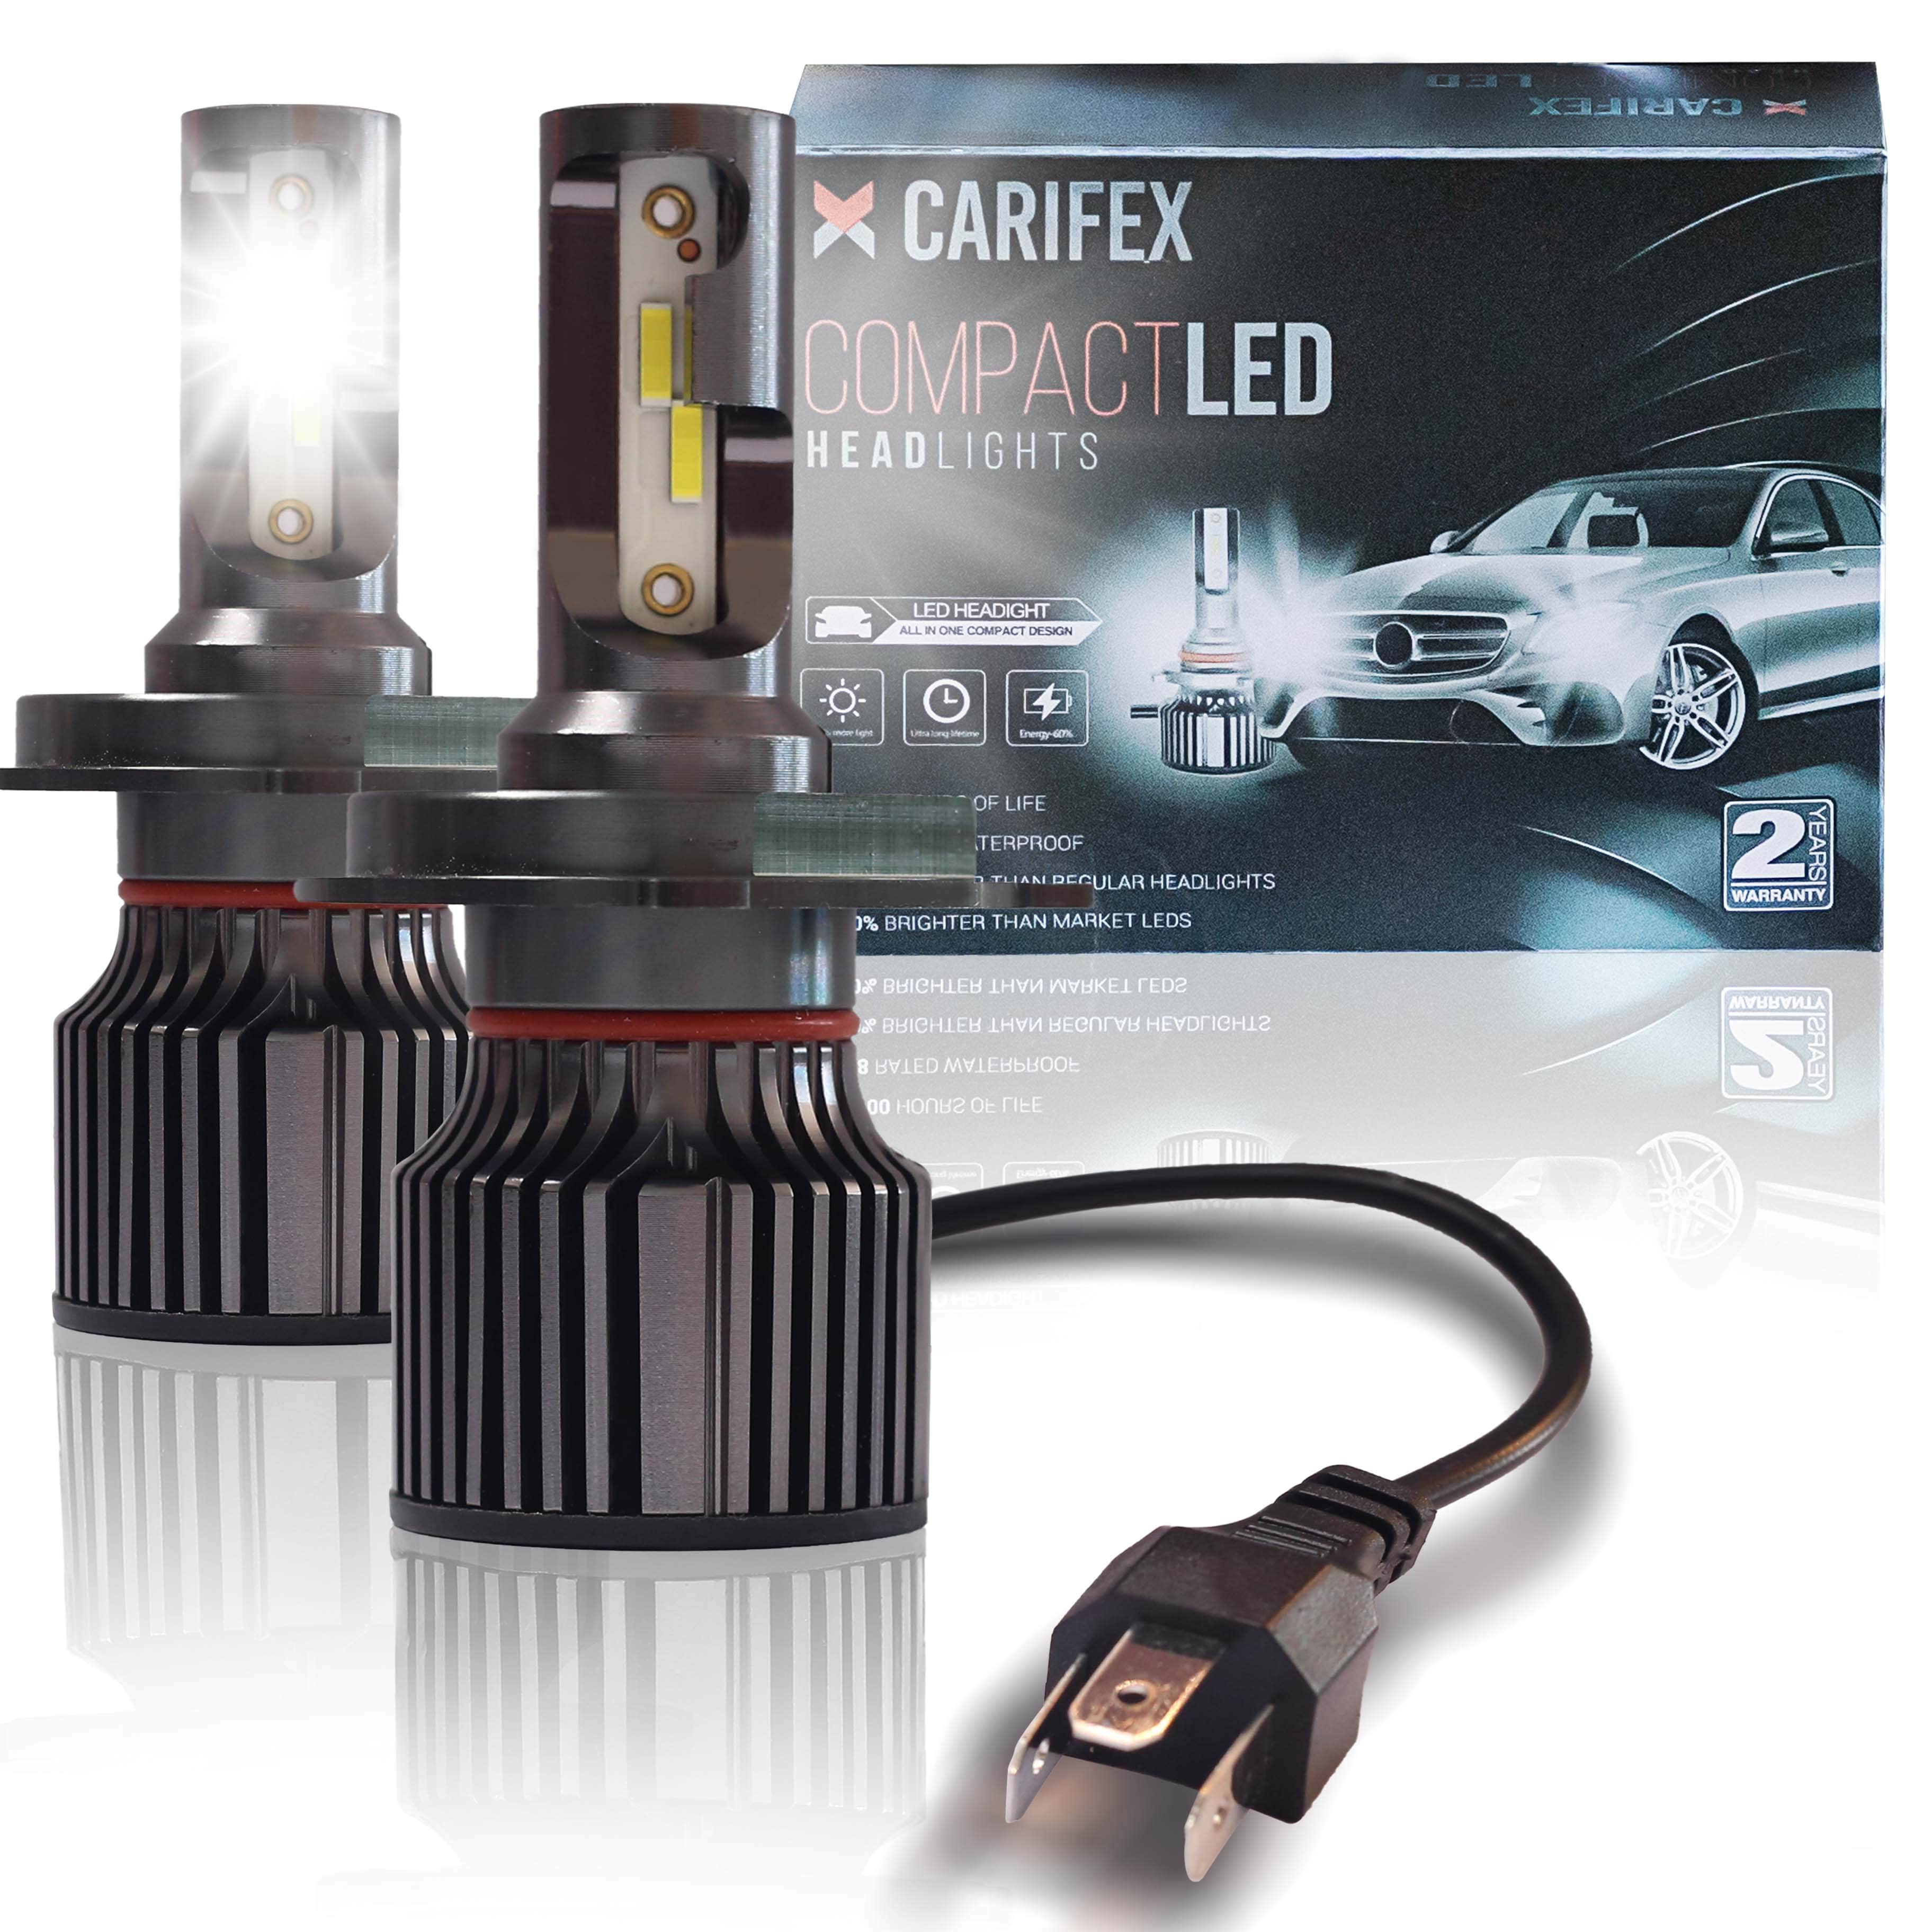 Carifex Compact LED Headlights Compact H4 LED Headlight Bulbs